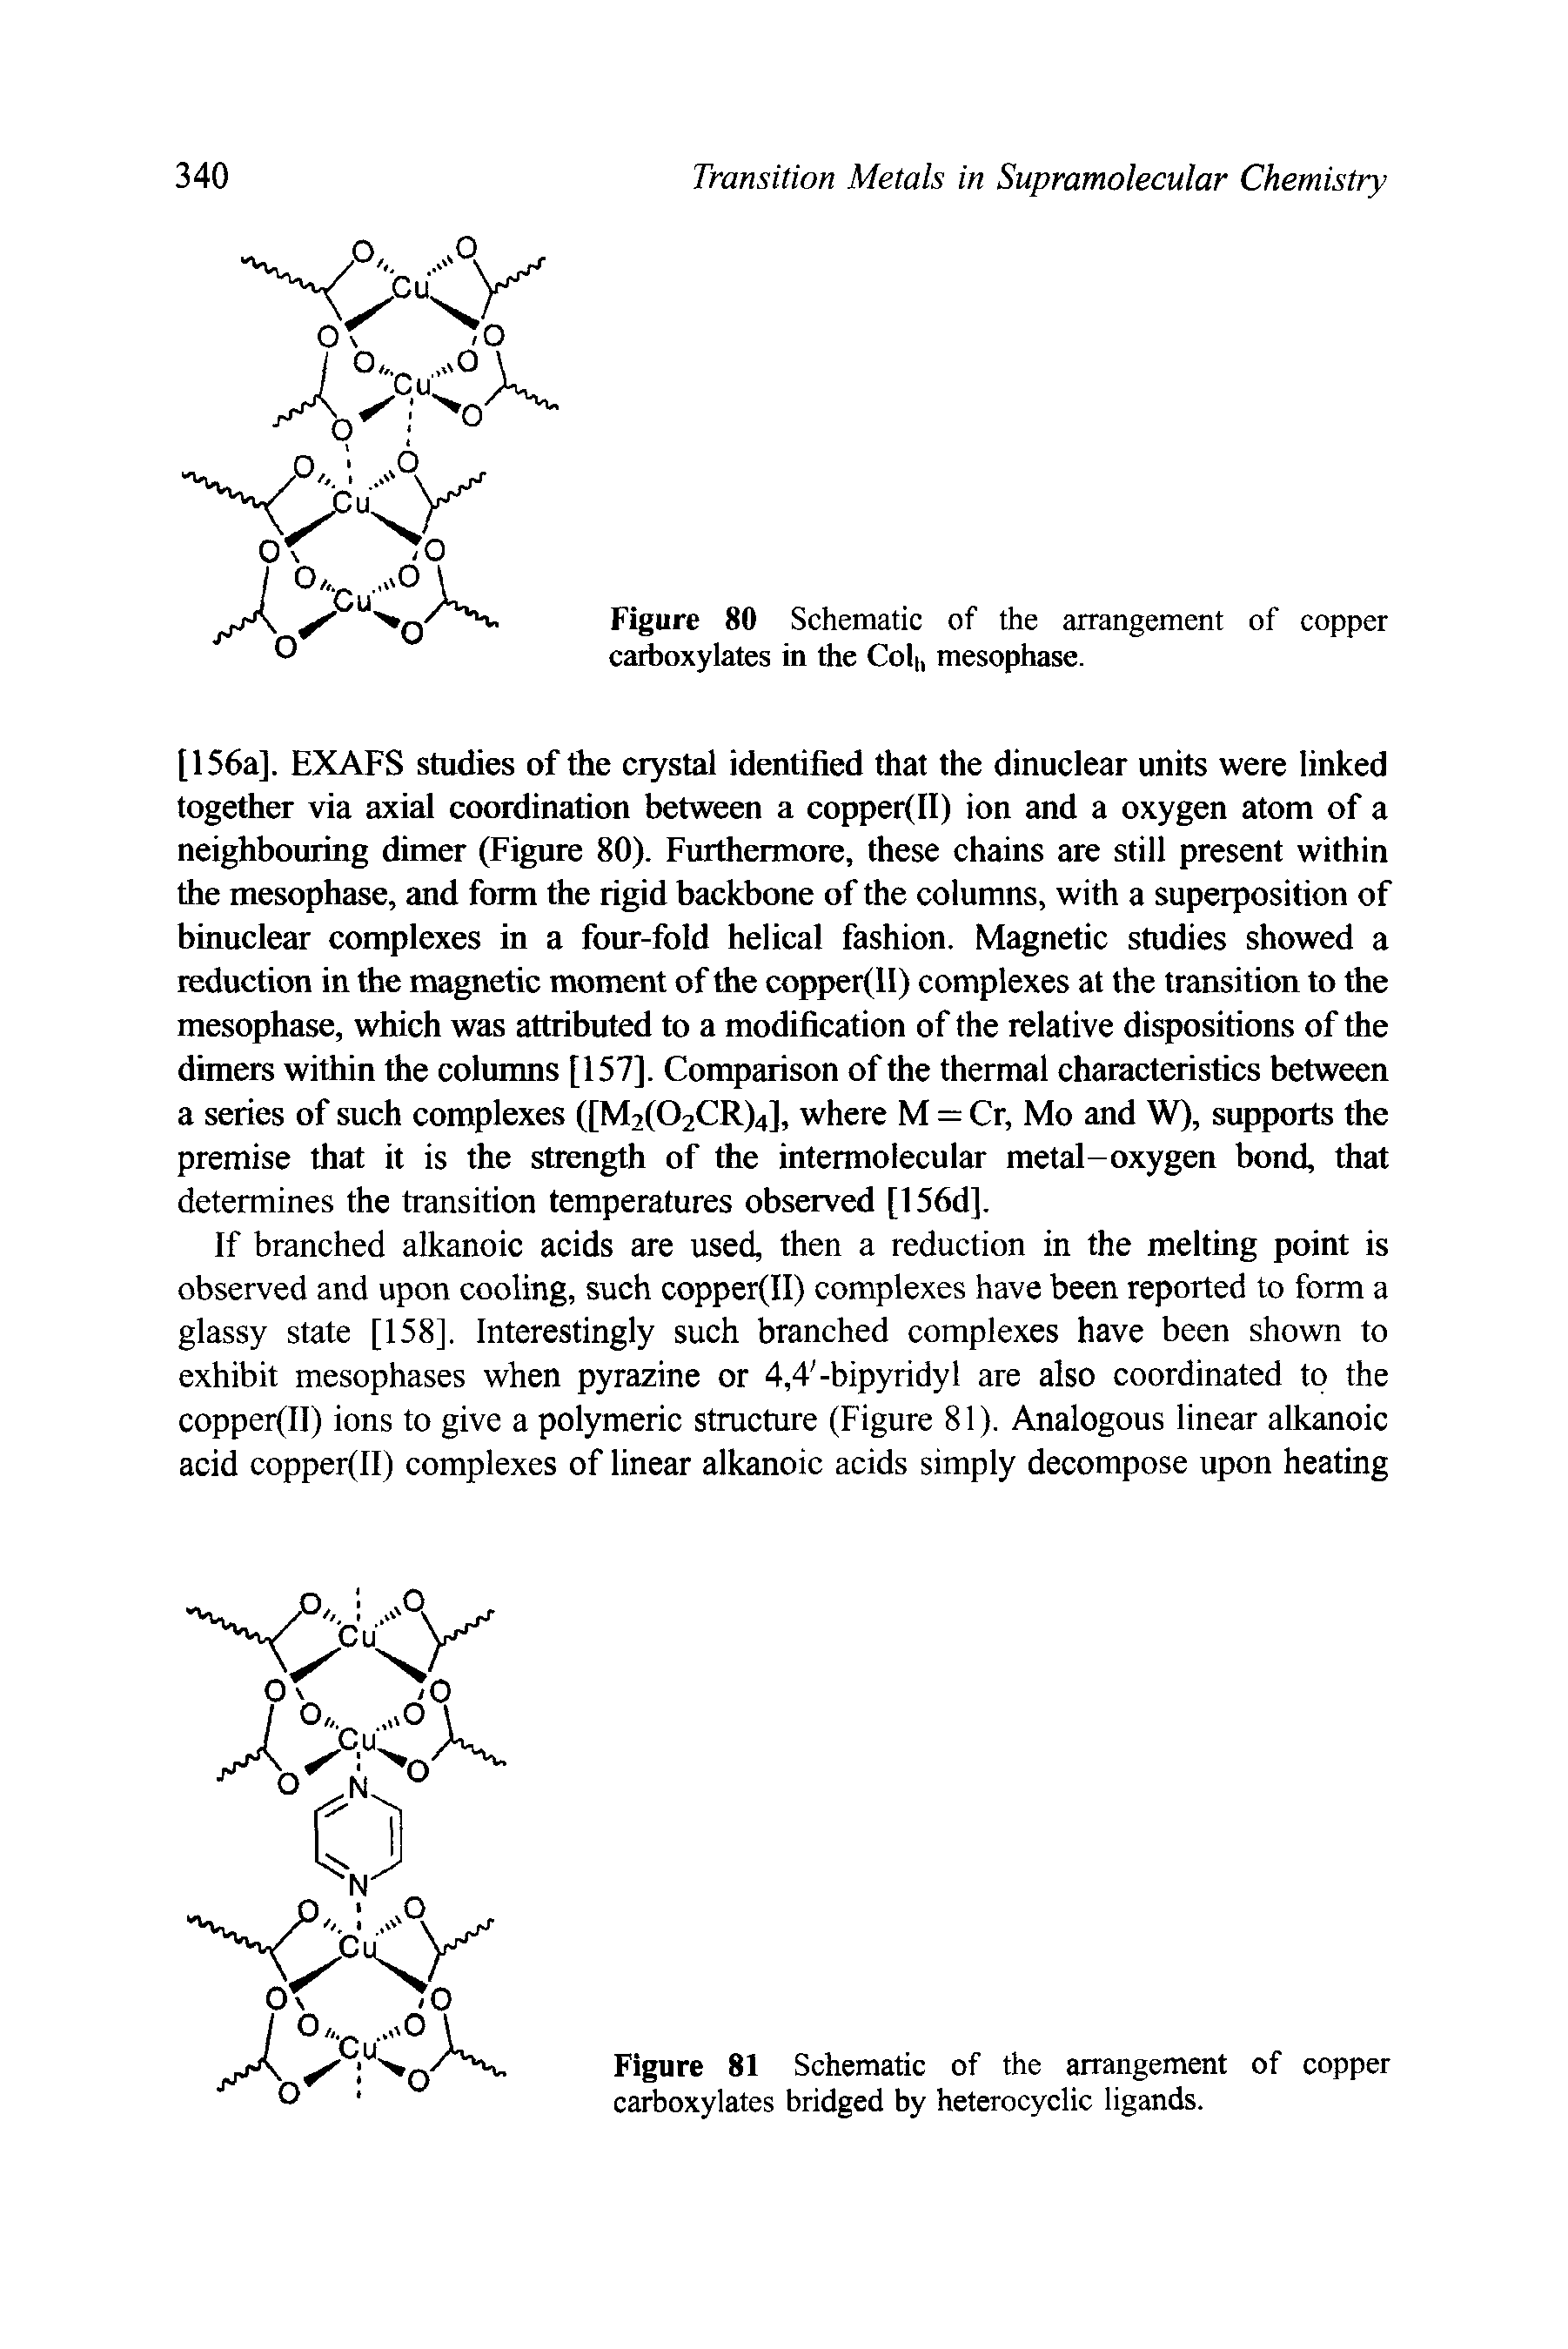 Figure 81 Schematic of the arrangement of copper carboxylates bridged by heterocyclic ligands.